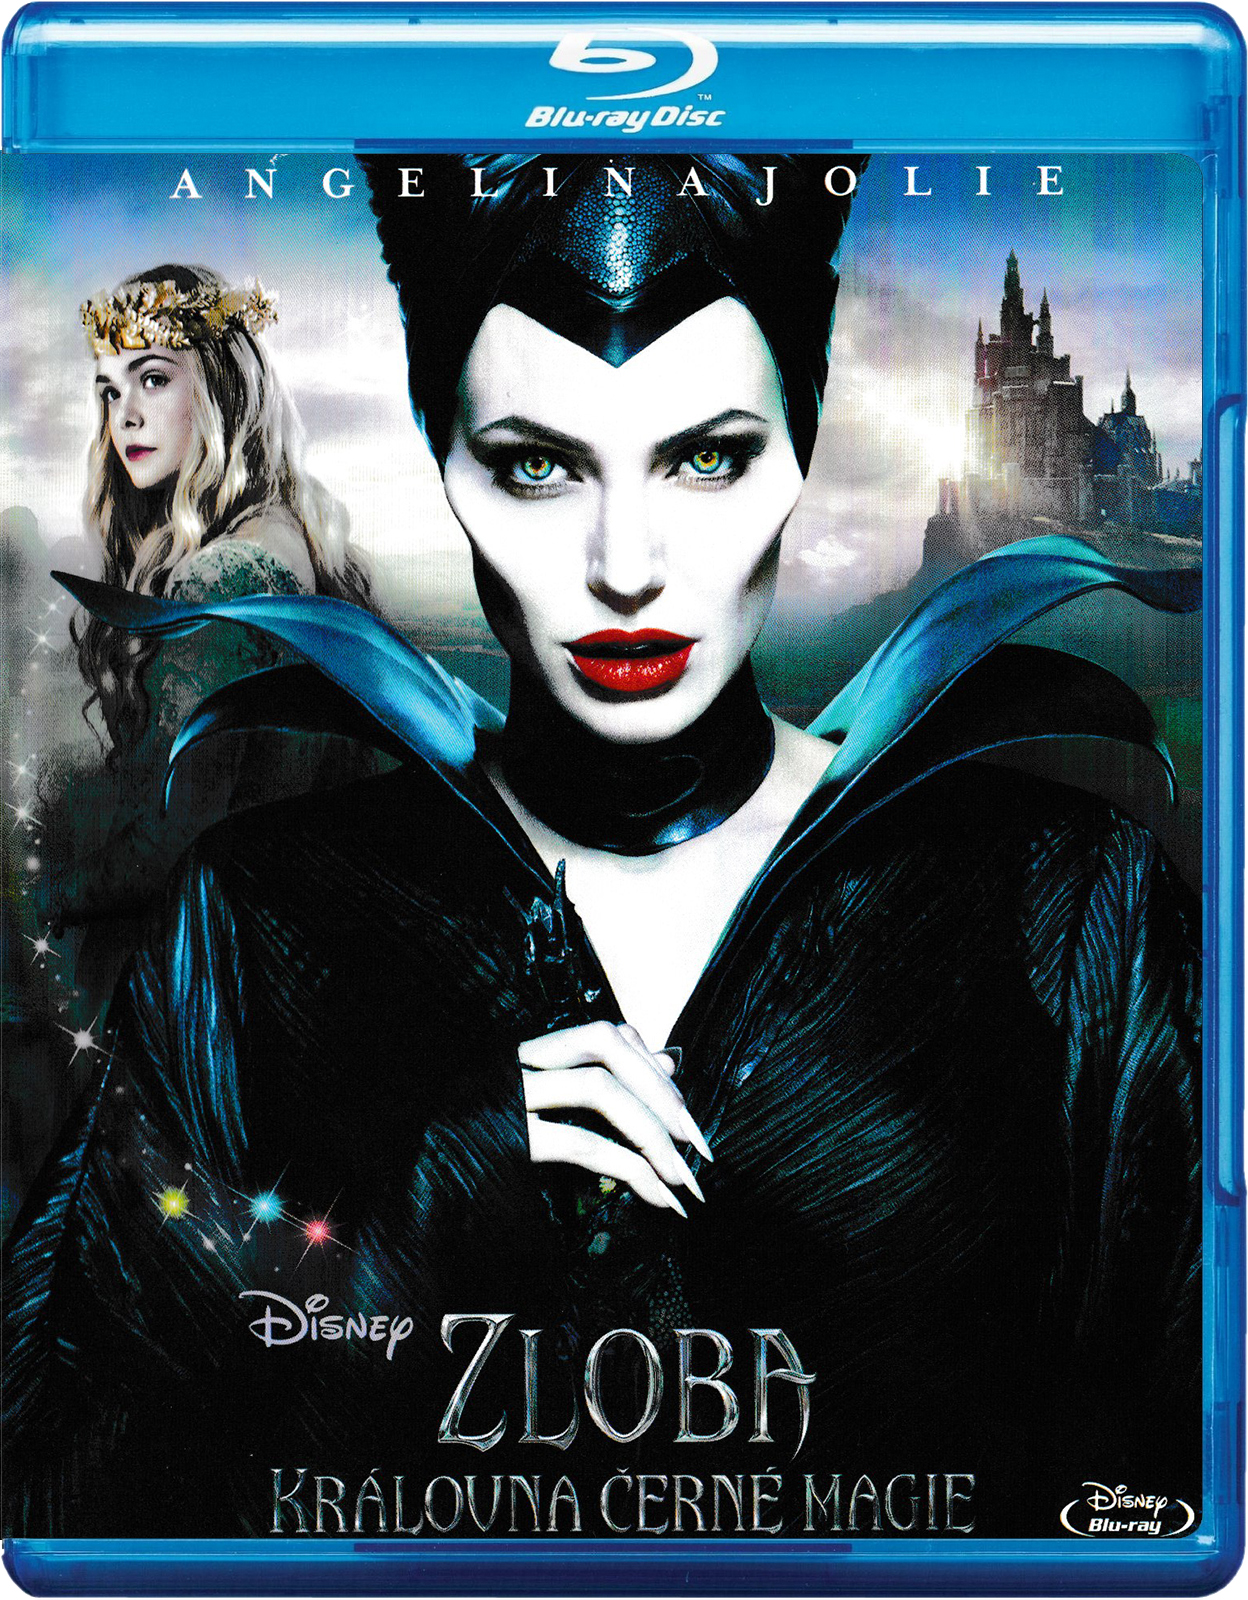 Stiahni si HD Filmy Zloba - Kralovna cerne magie / Maleficent (2014)(CZ/EN)[1080pHD] = CSFD 73%